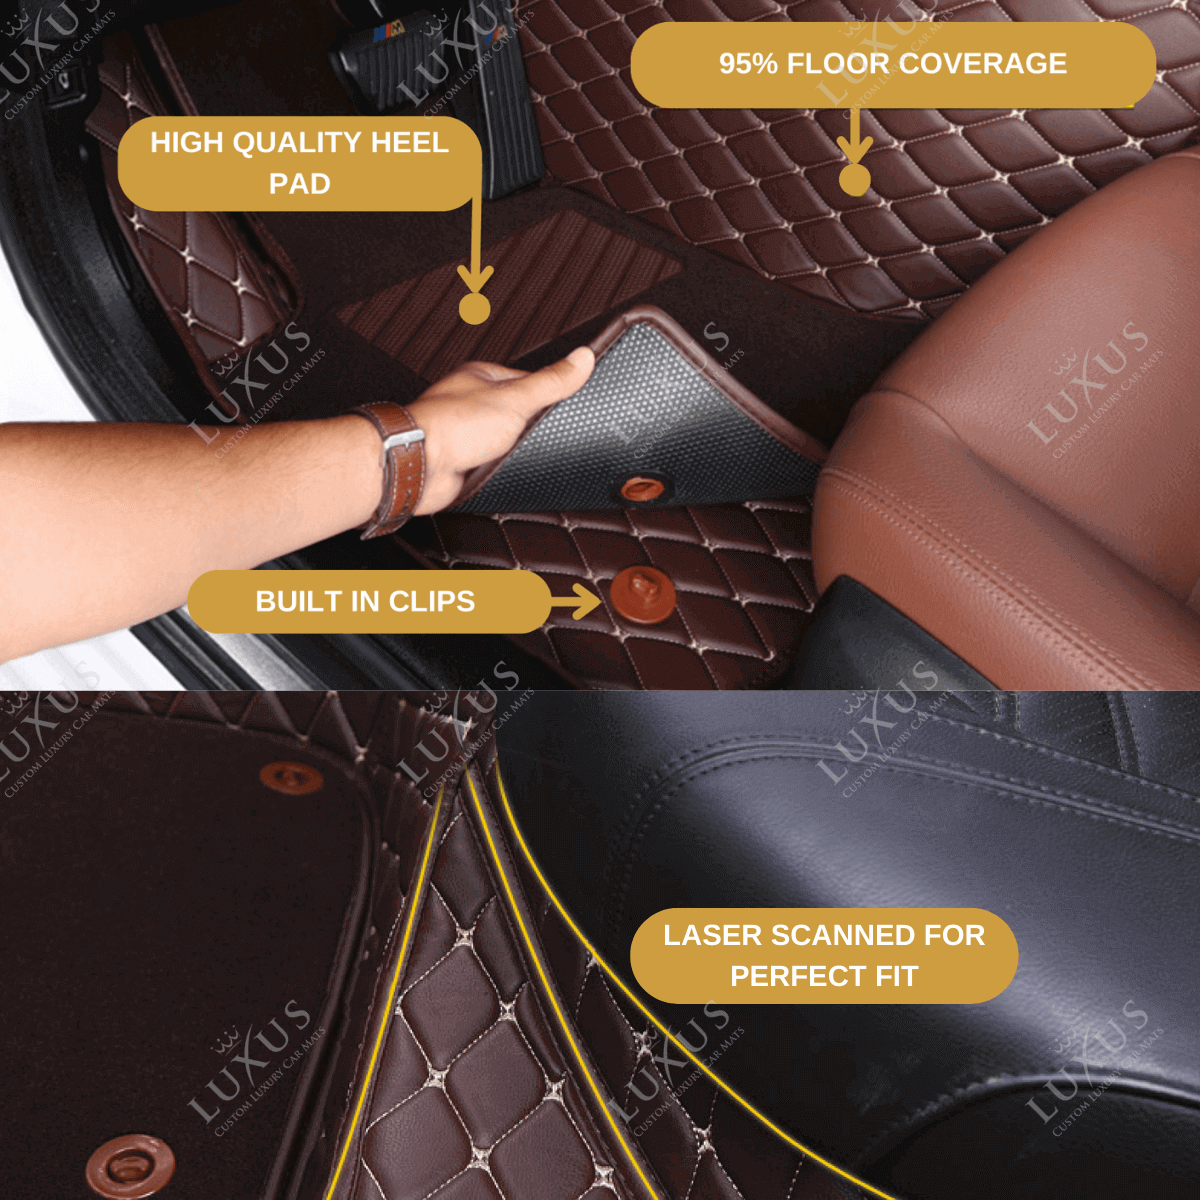 Caramel Brown Honeycomb Base & Black Top Carpet Double Layer Luxury Car Mats Set